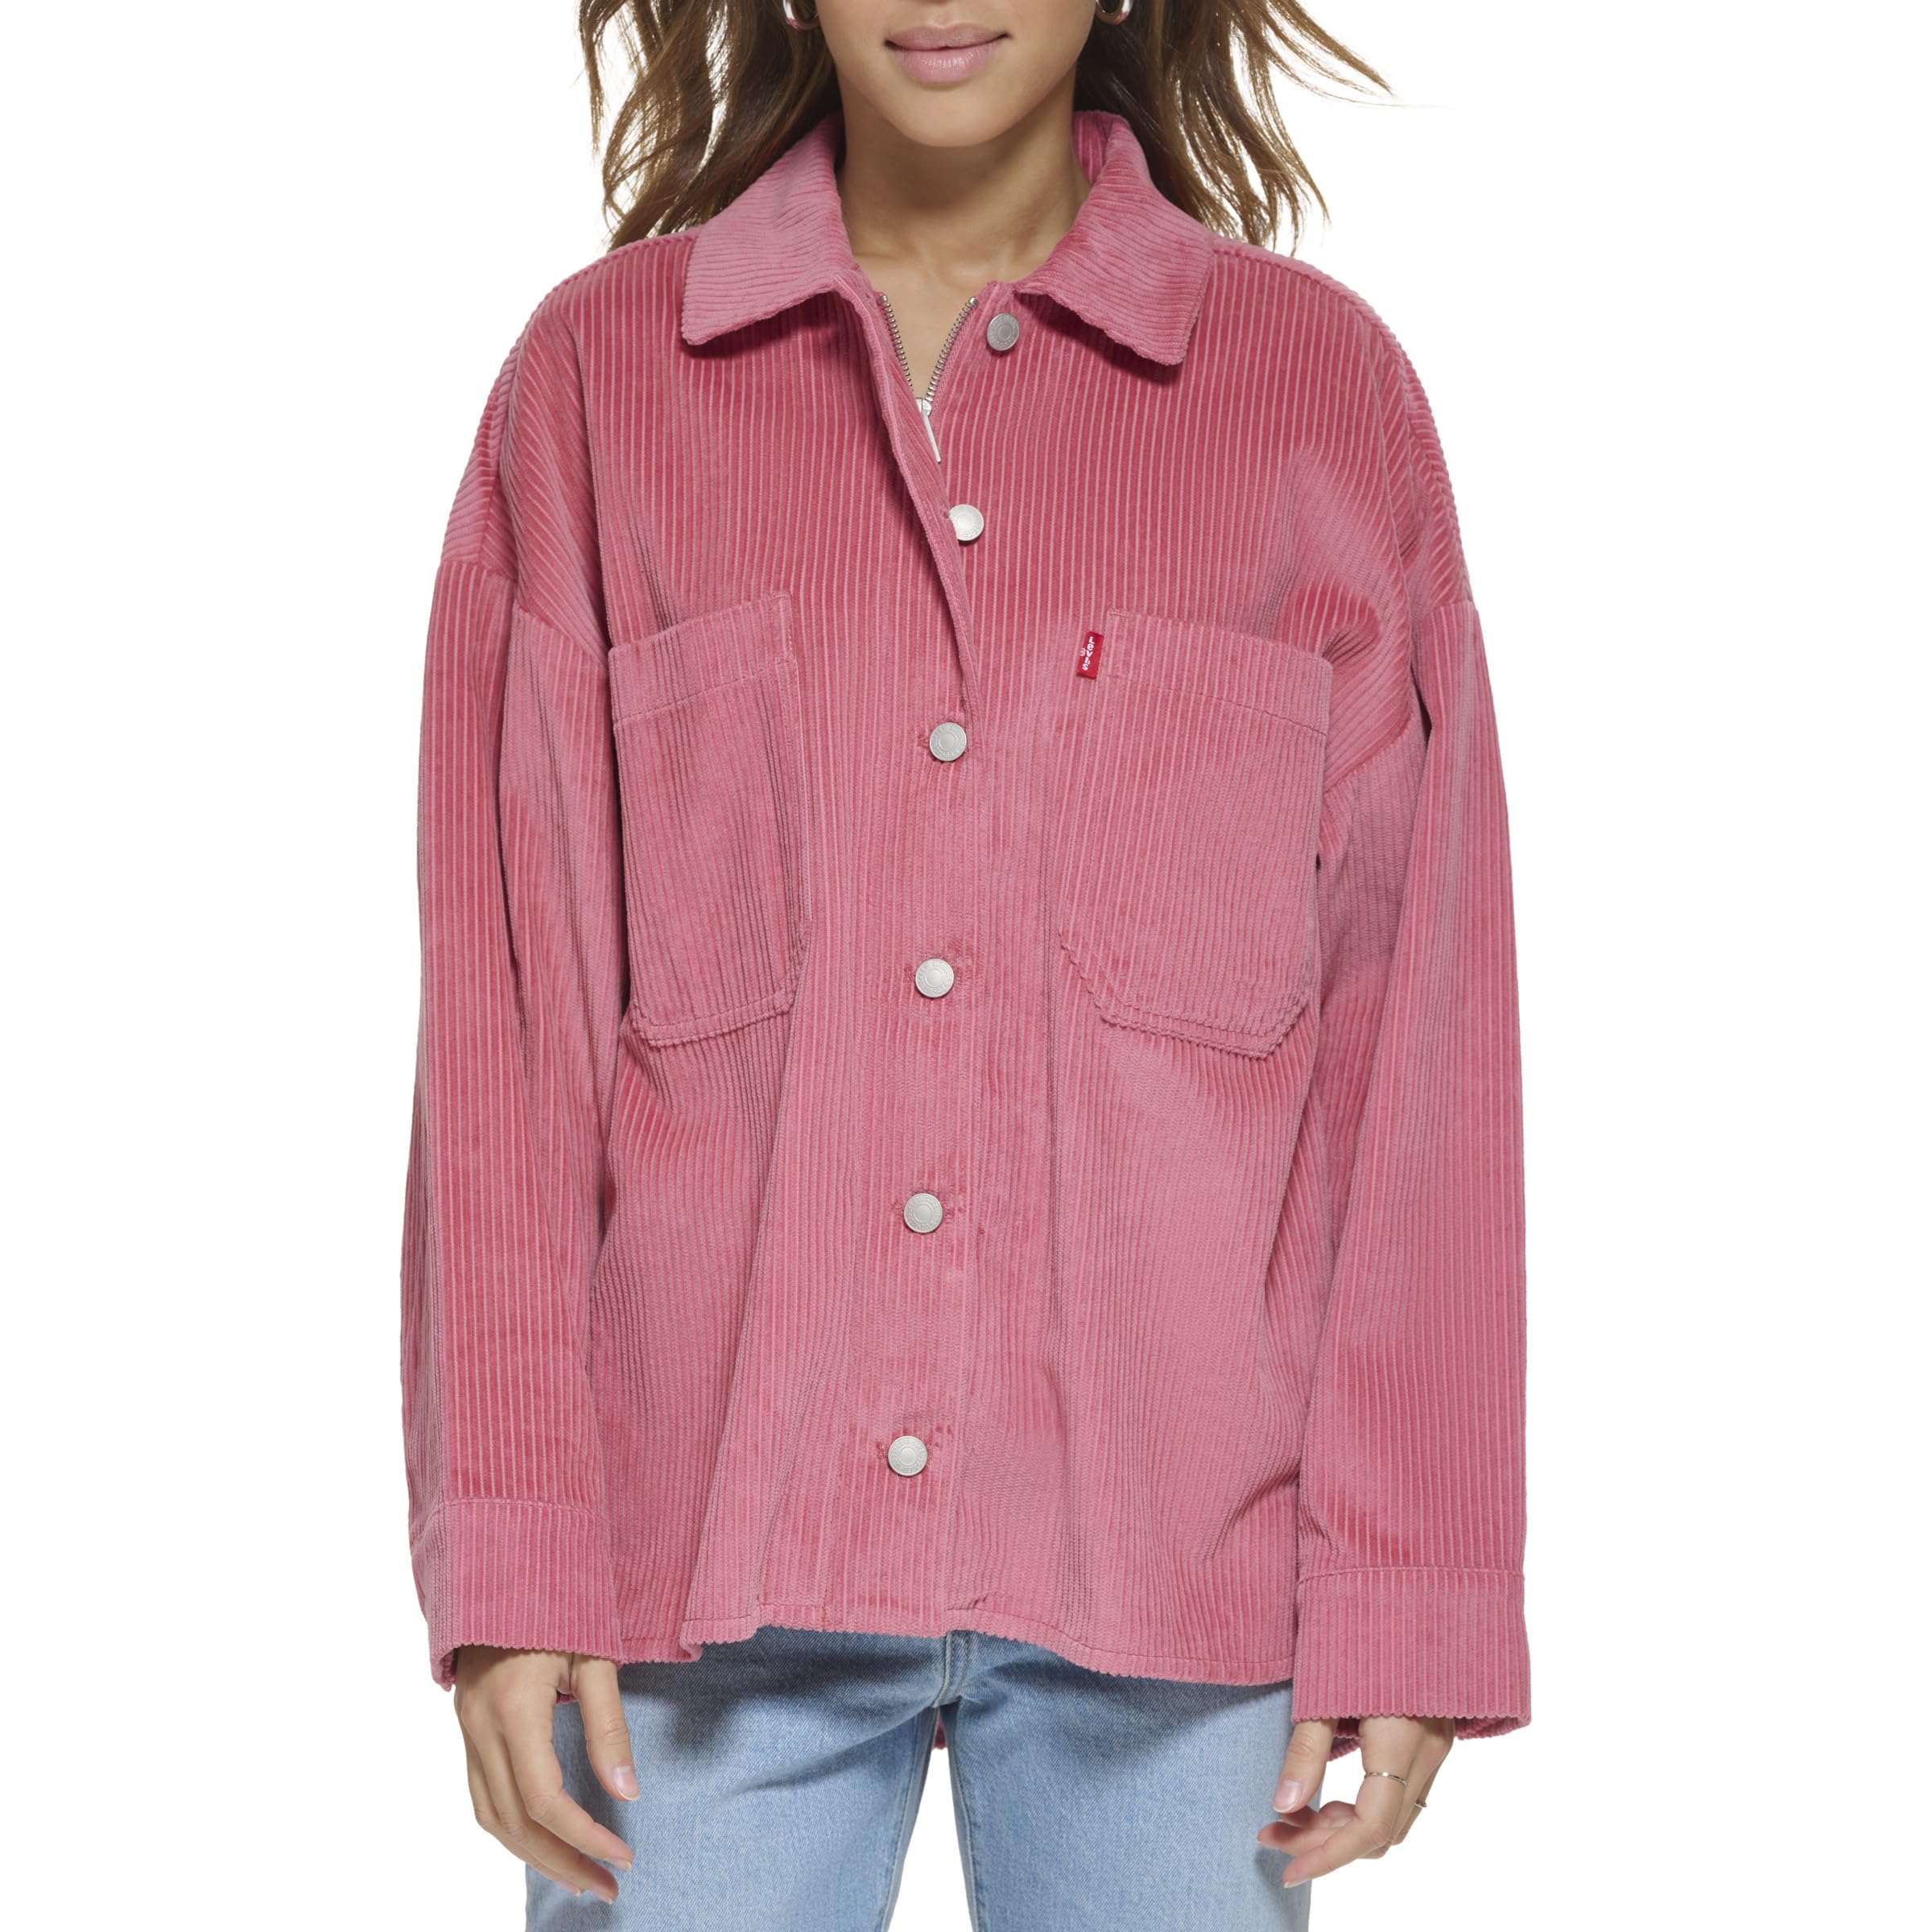 Levi's Women's Cotton Corduroy Shirt Jacket